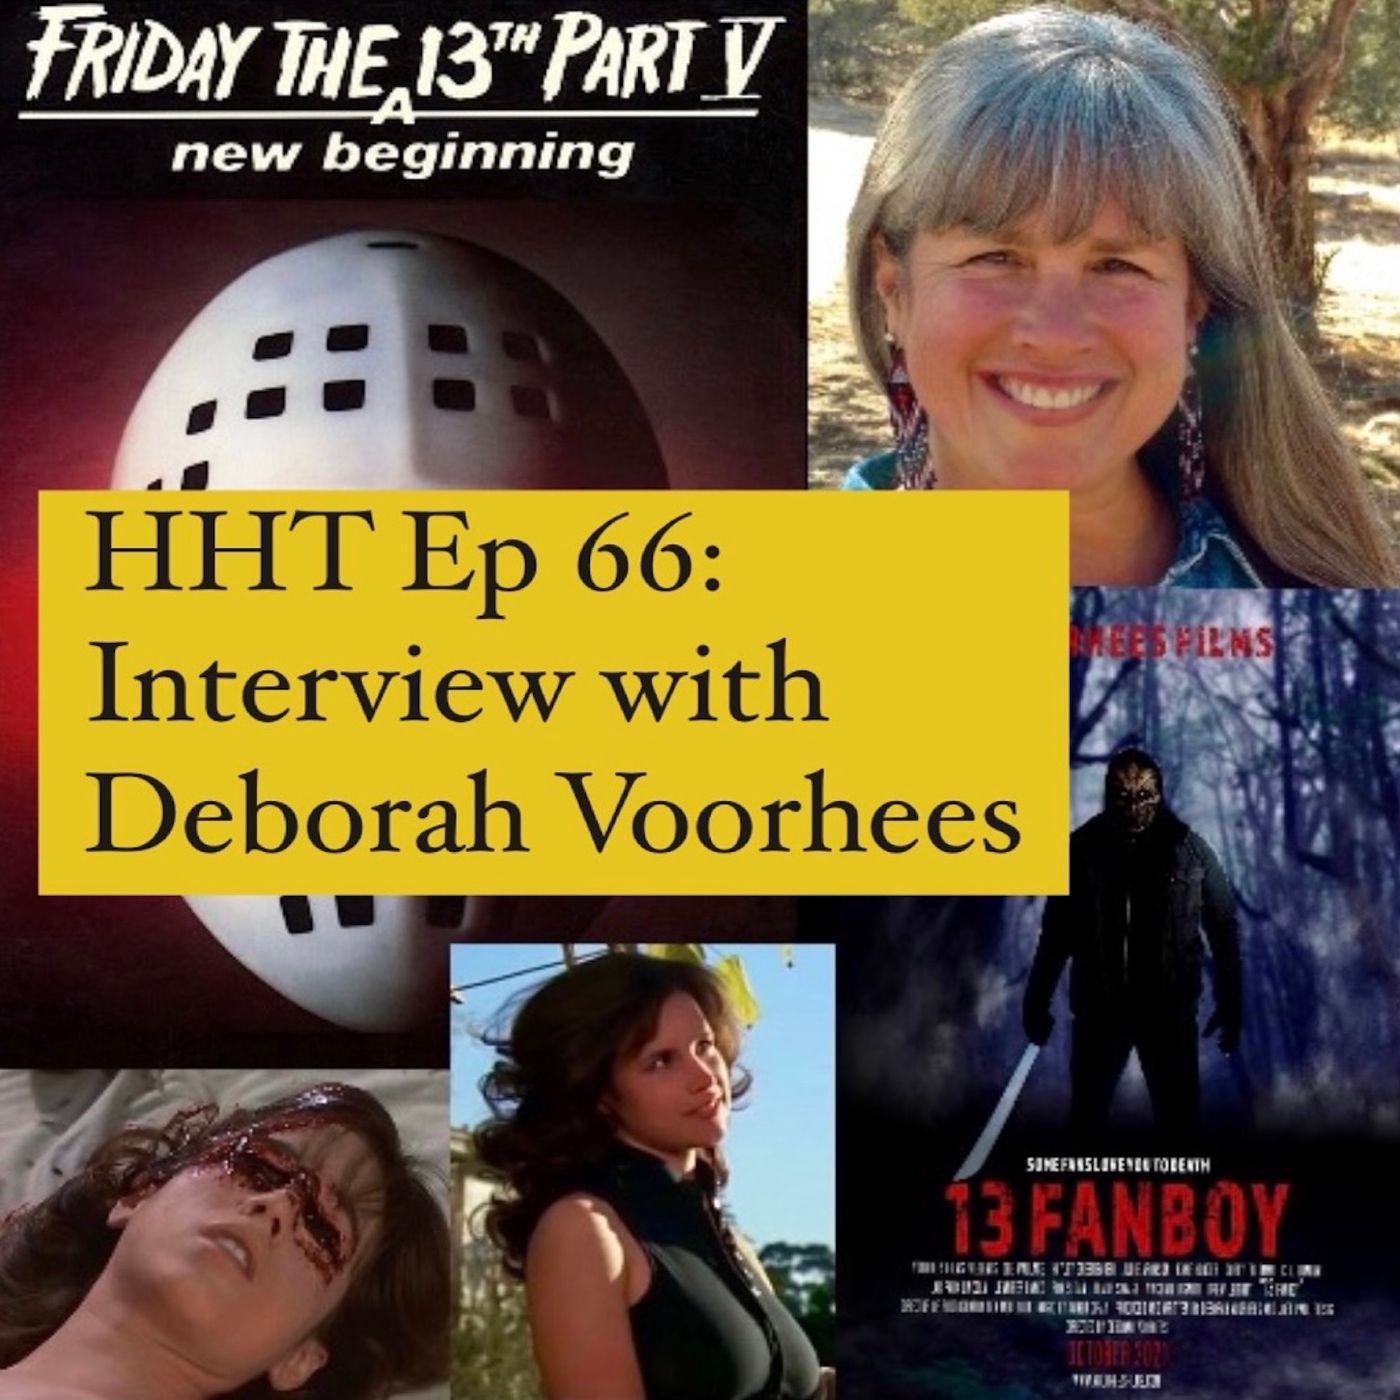 Ep 66: Interview w/Deborah Voorhees from "F13: A New Beginning" & "13 Fanboy" Image